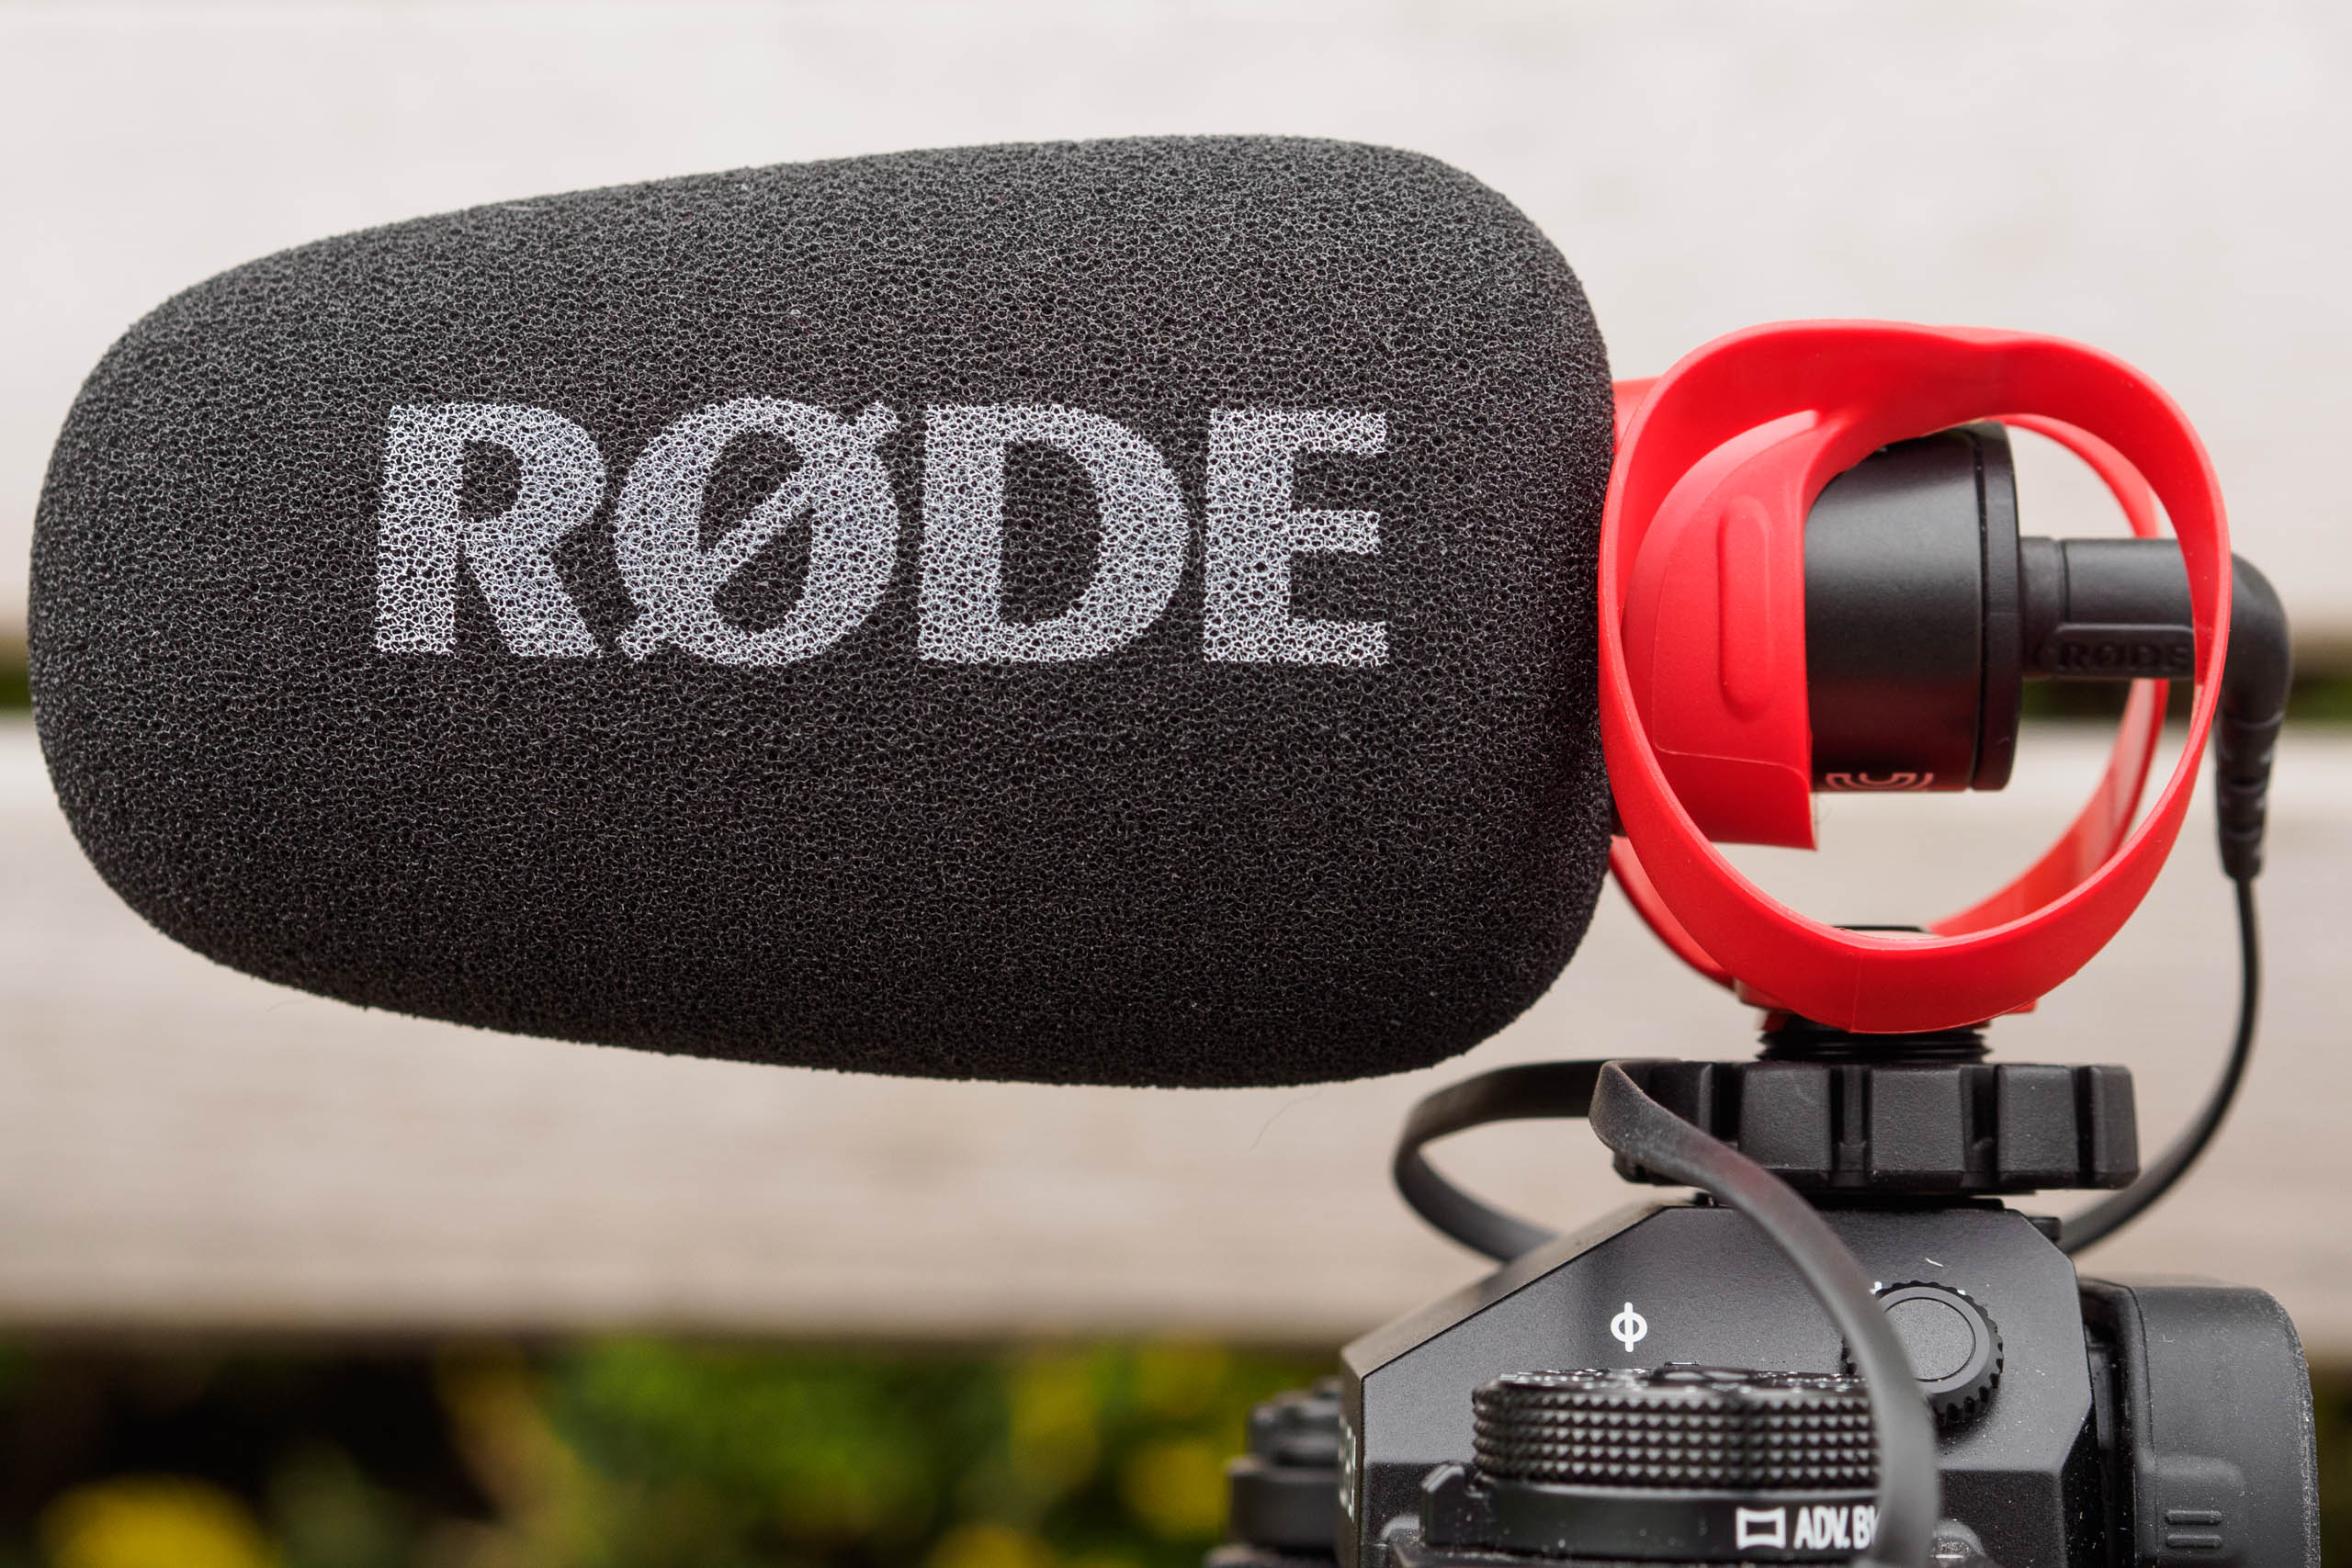 Rode VideoMicro II review - Amateur Photographer